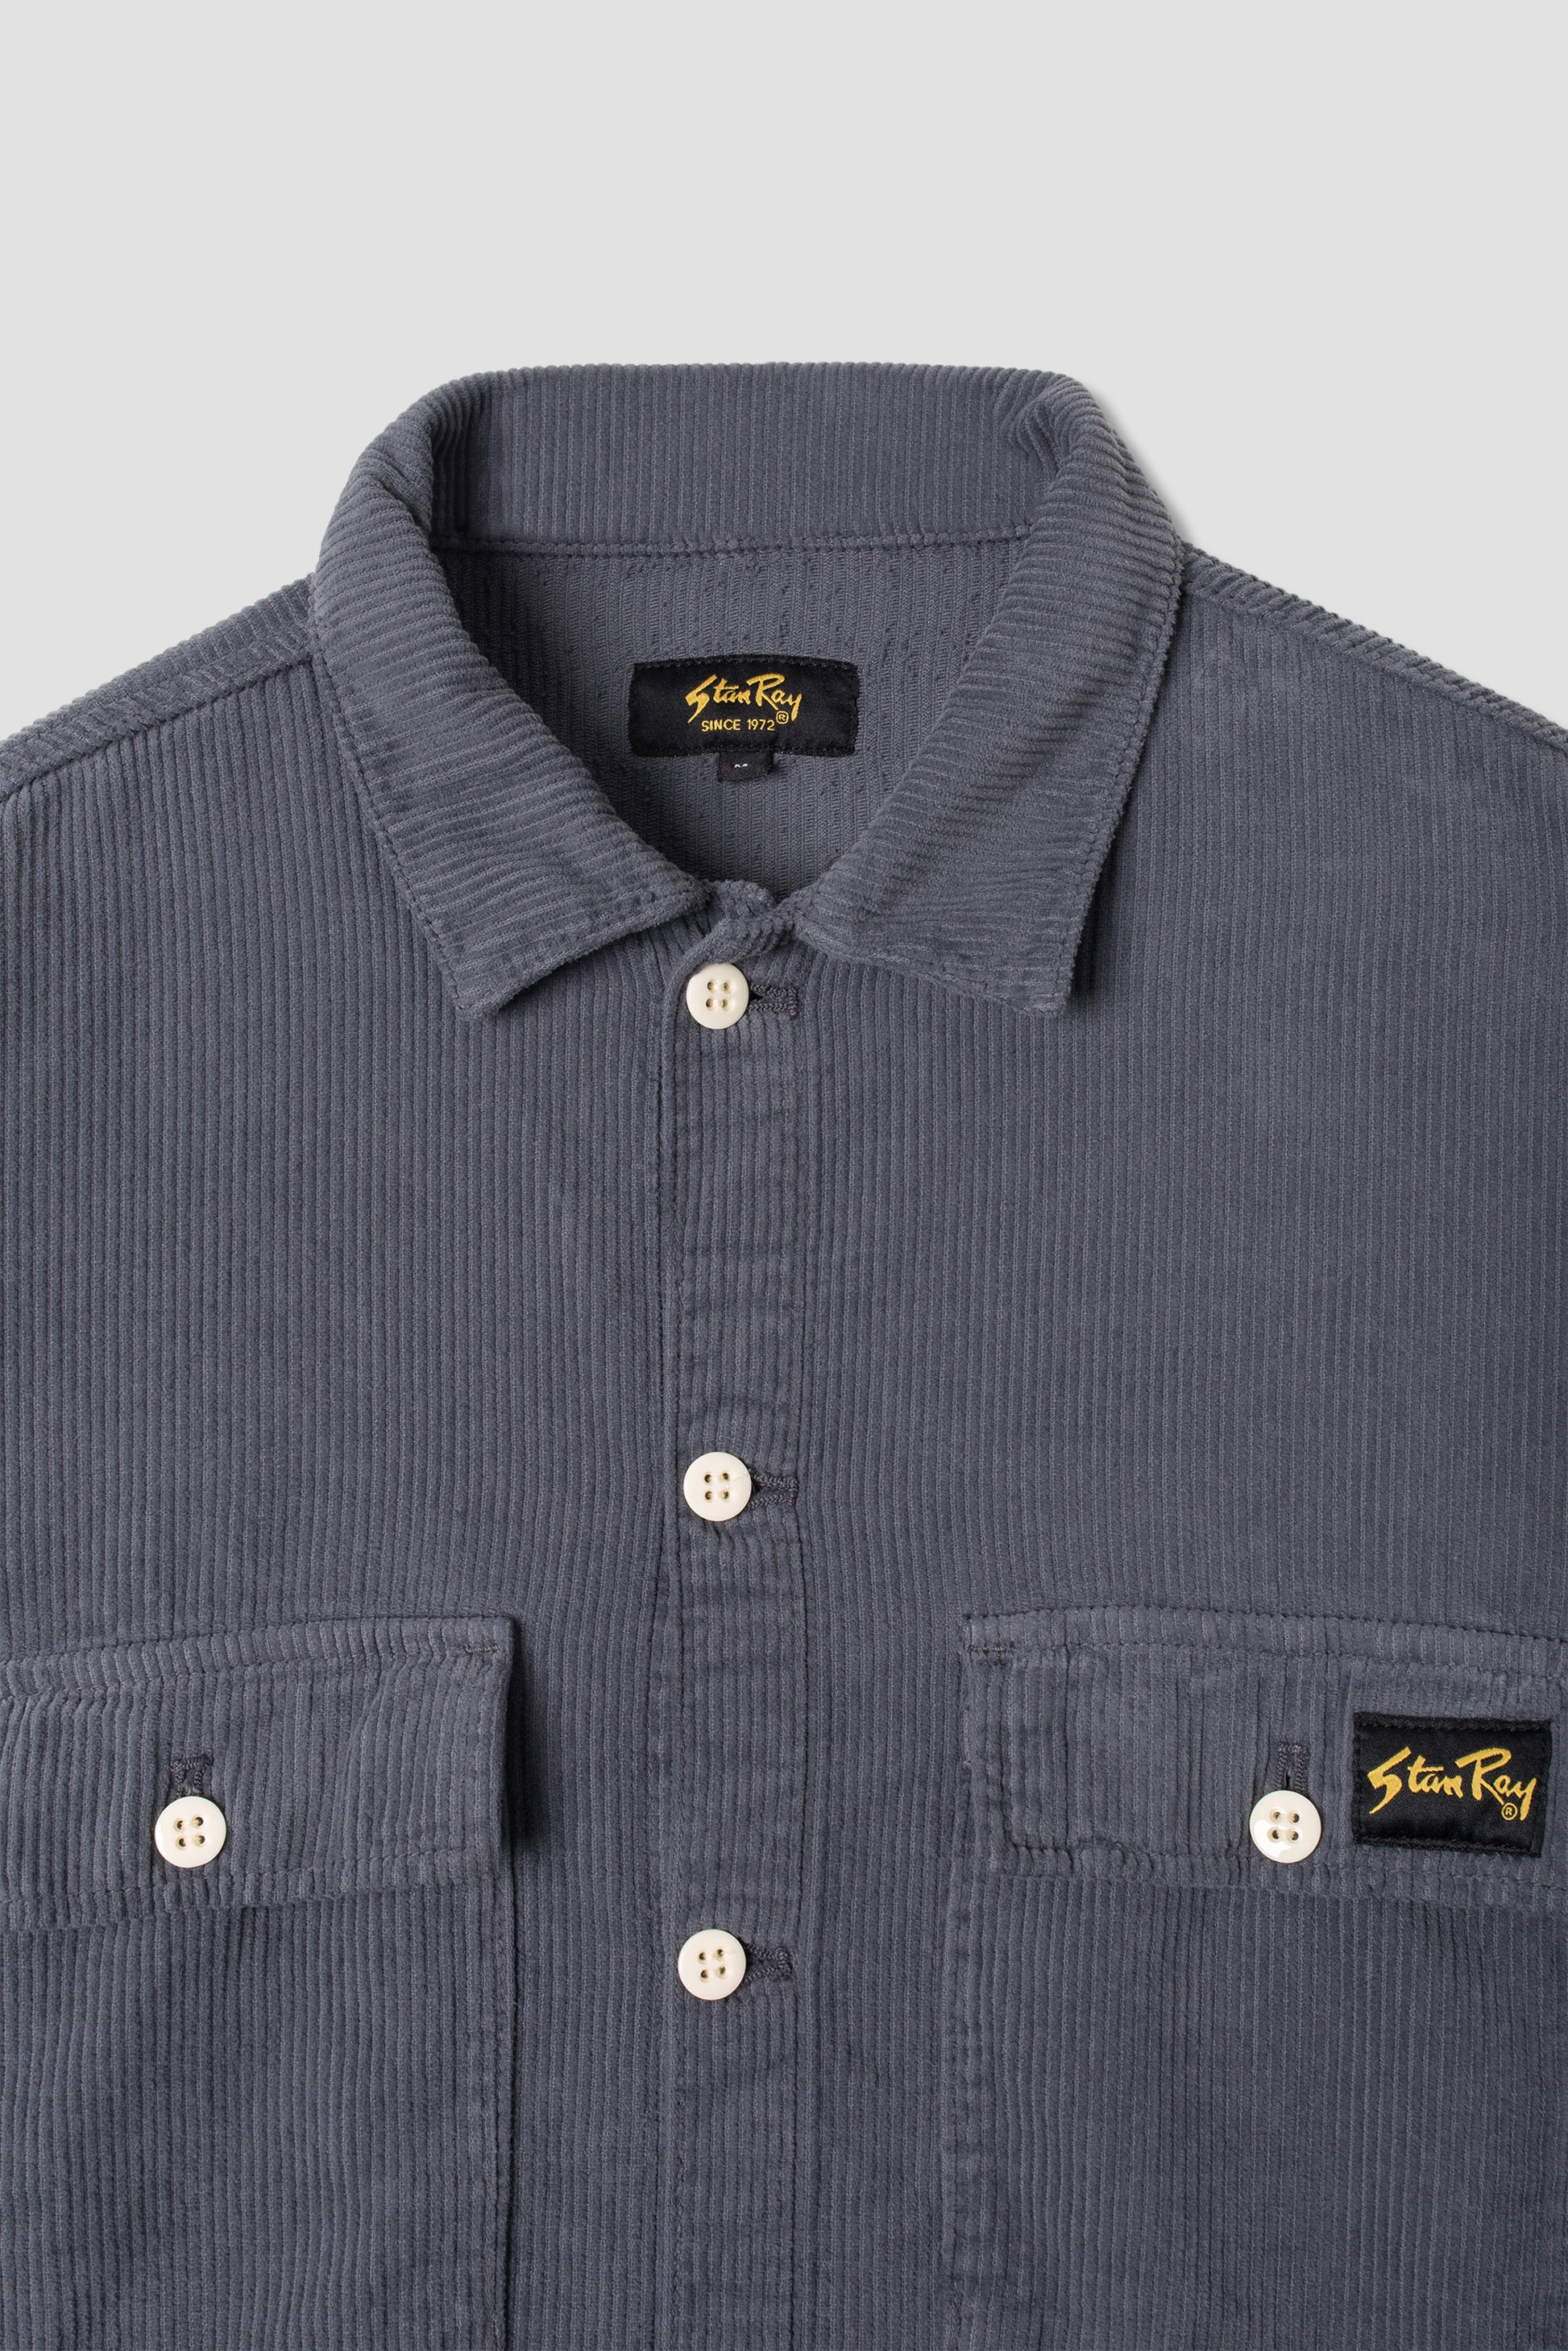 CPO Shirt (Navy Cord) – Stan Ray